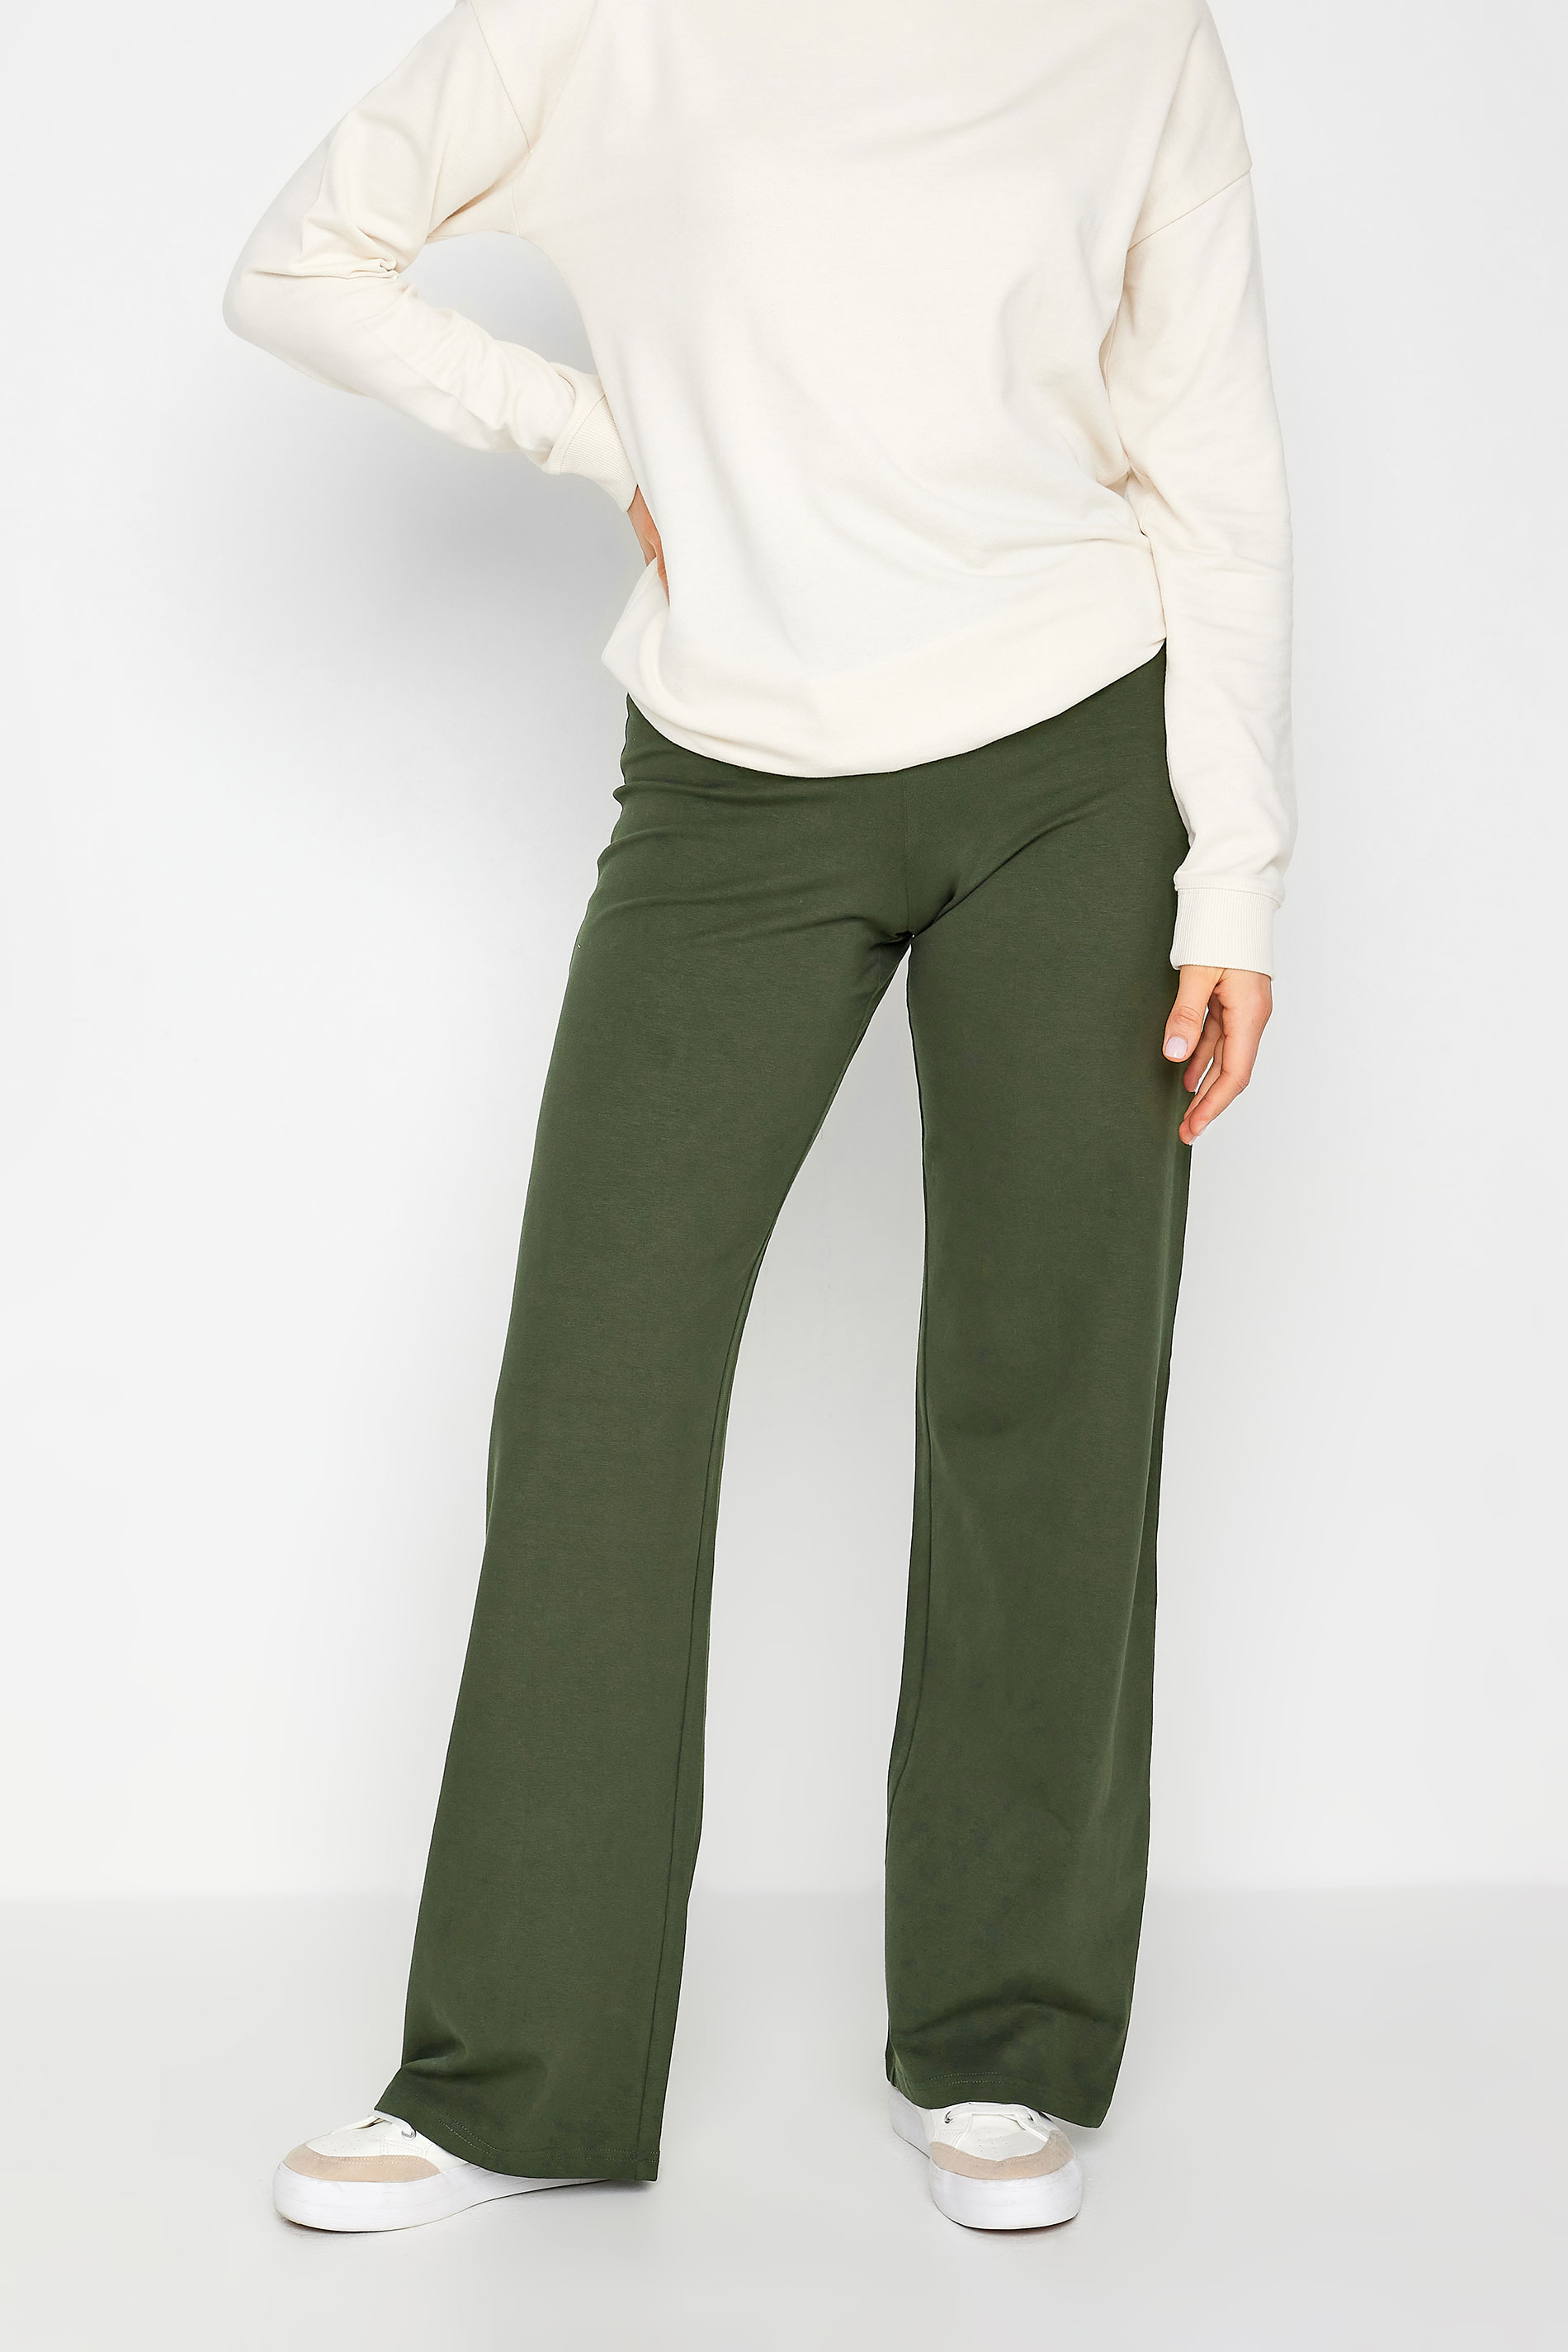 LTS Tall Womens Khaki Green Wide Leg Yoga Pants | Long Tall Sally 2